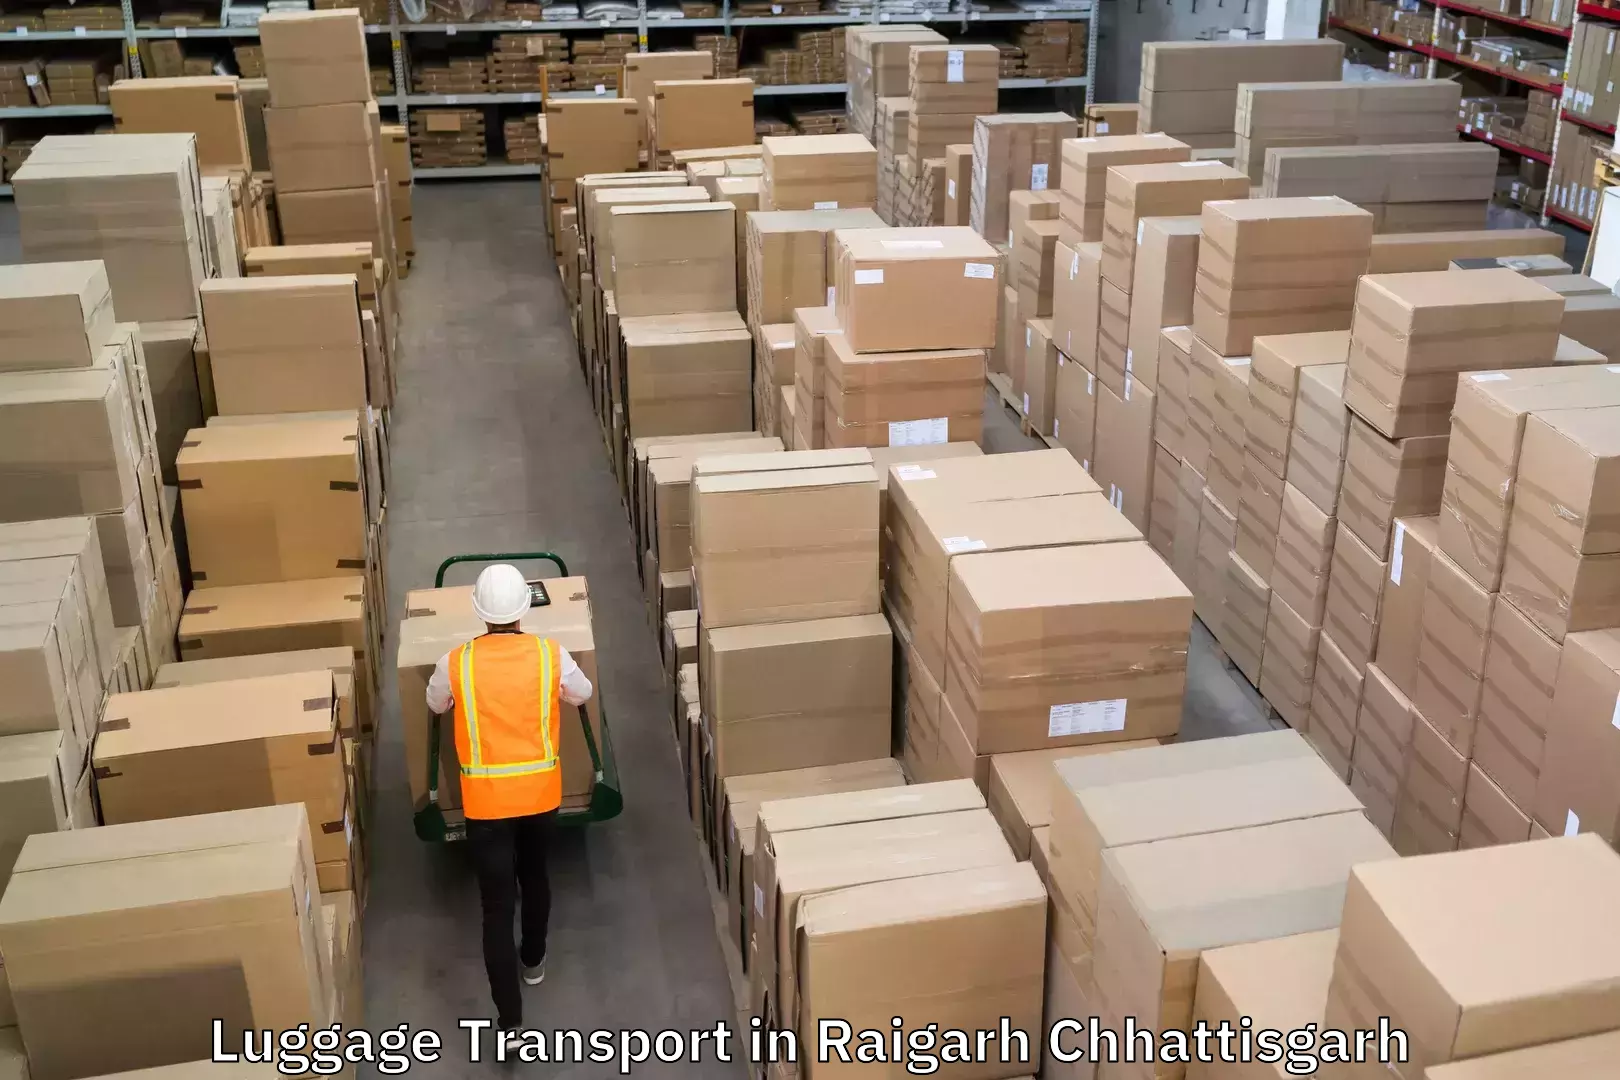 Instant baggage transport quote in Raigarh Chhattisgarh